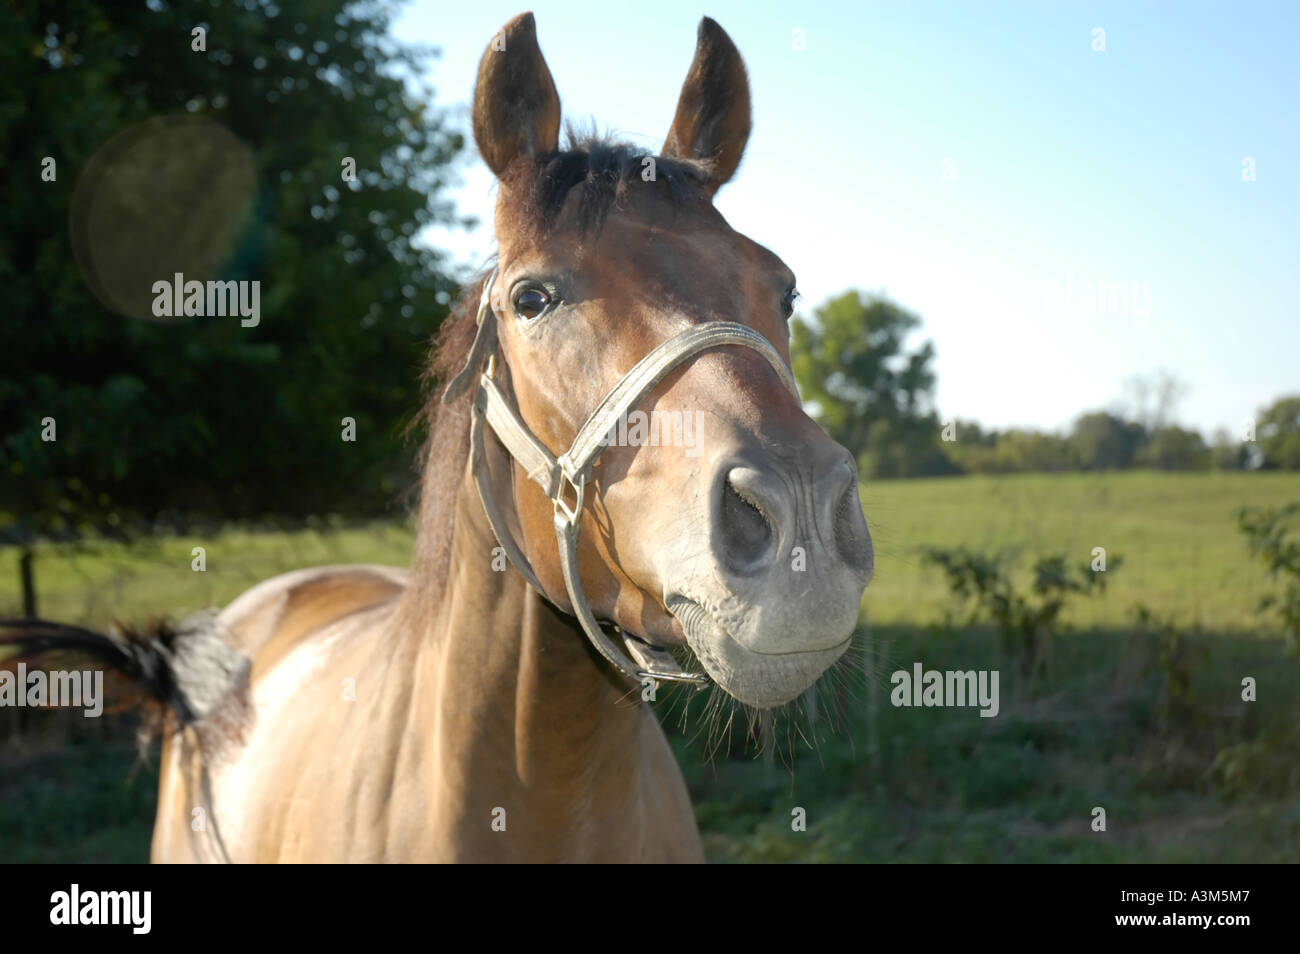 Thoroughbred race horse head Stock Photo